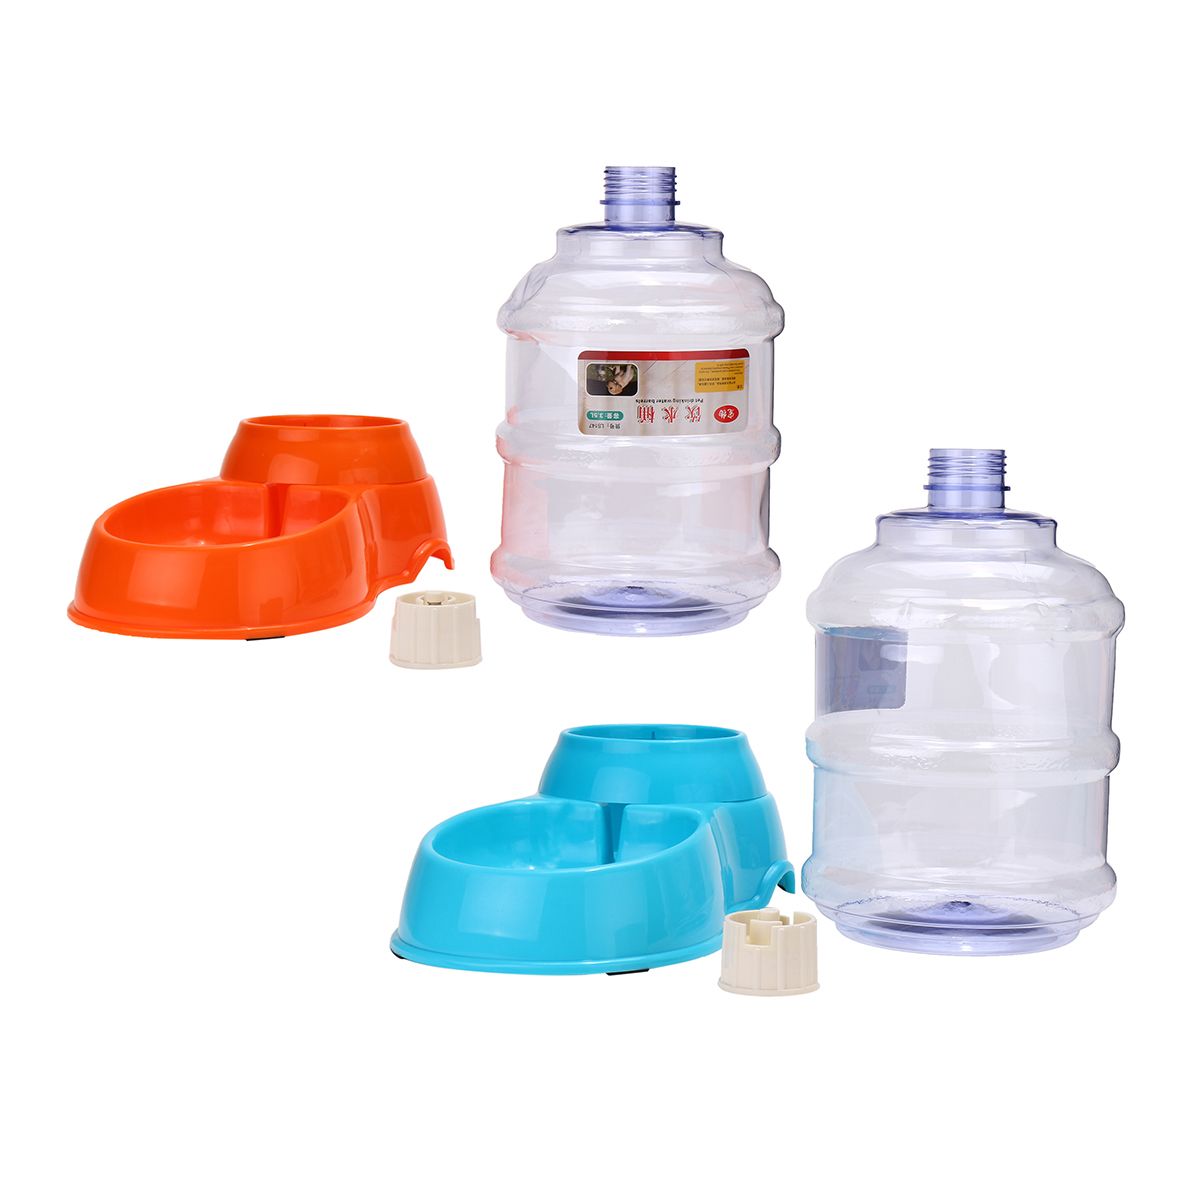 Large-Automatic-Pet-Dog-Cat-Water-Feeder-Bowl-Bottle-Dispenser-Plastic-38Liters-1553830